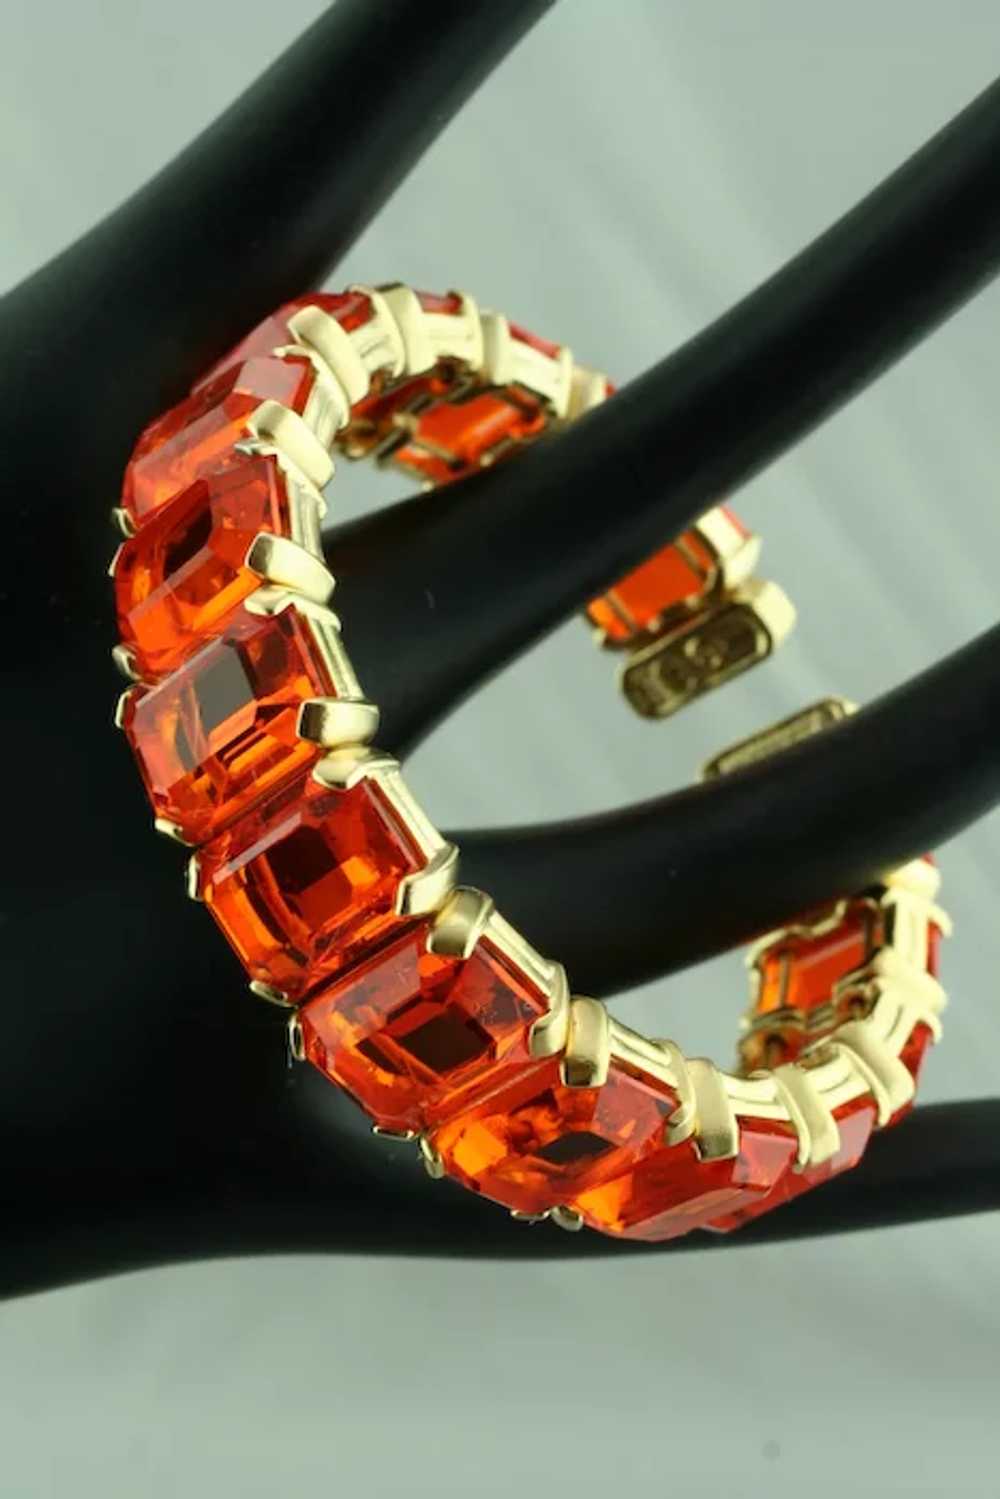 Swarovski crystal bracelet and earrings - image 2